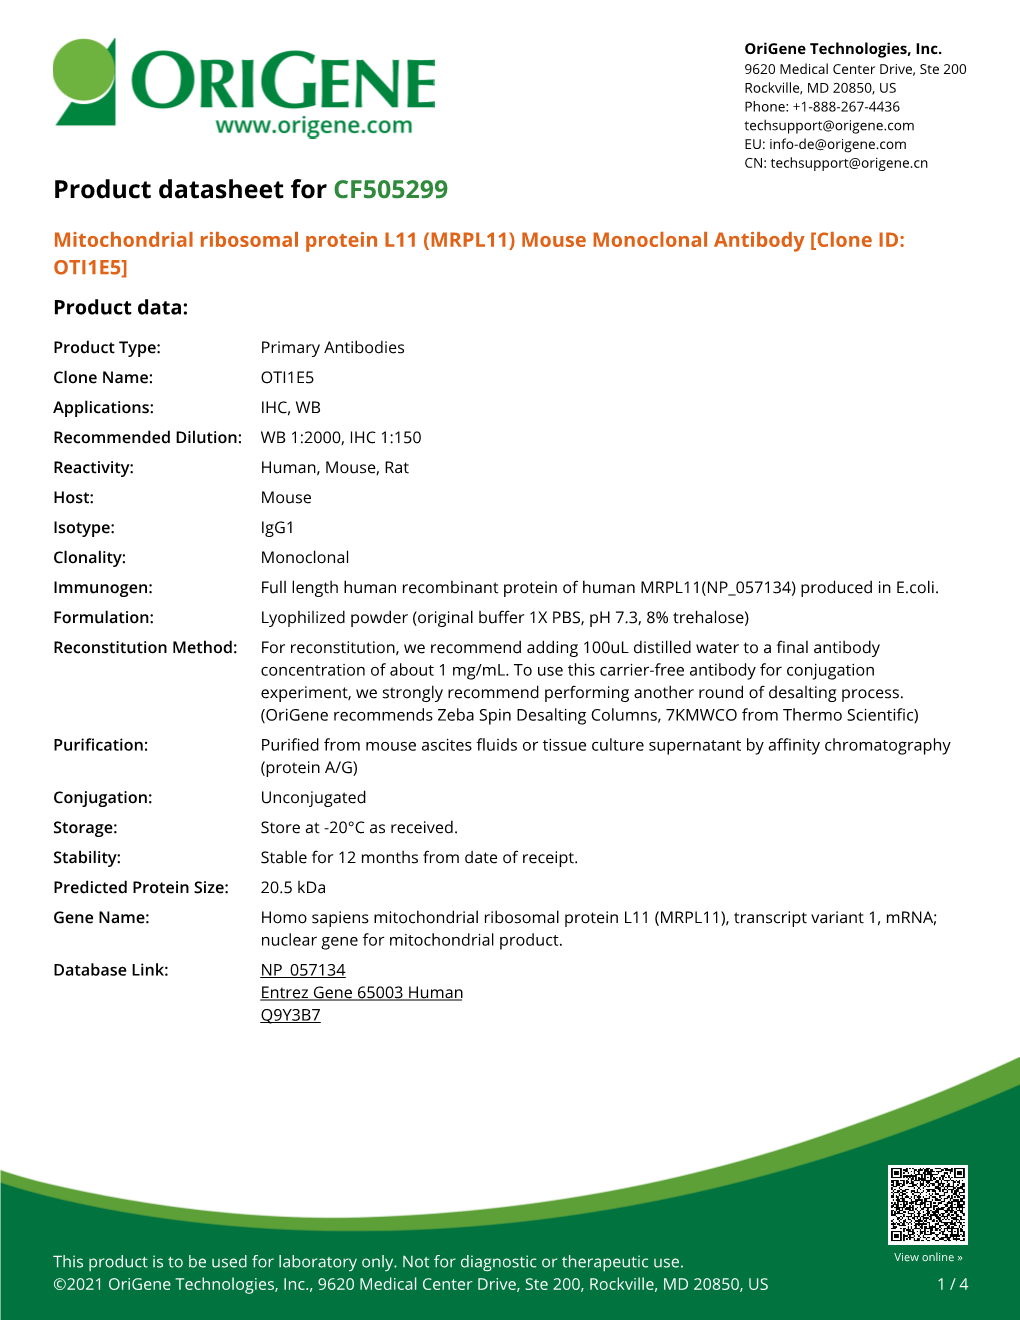 (MRPL11) Mouse Monoclonal Antibody [Clone ID: OTI1E5] Product Data